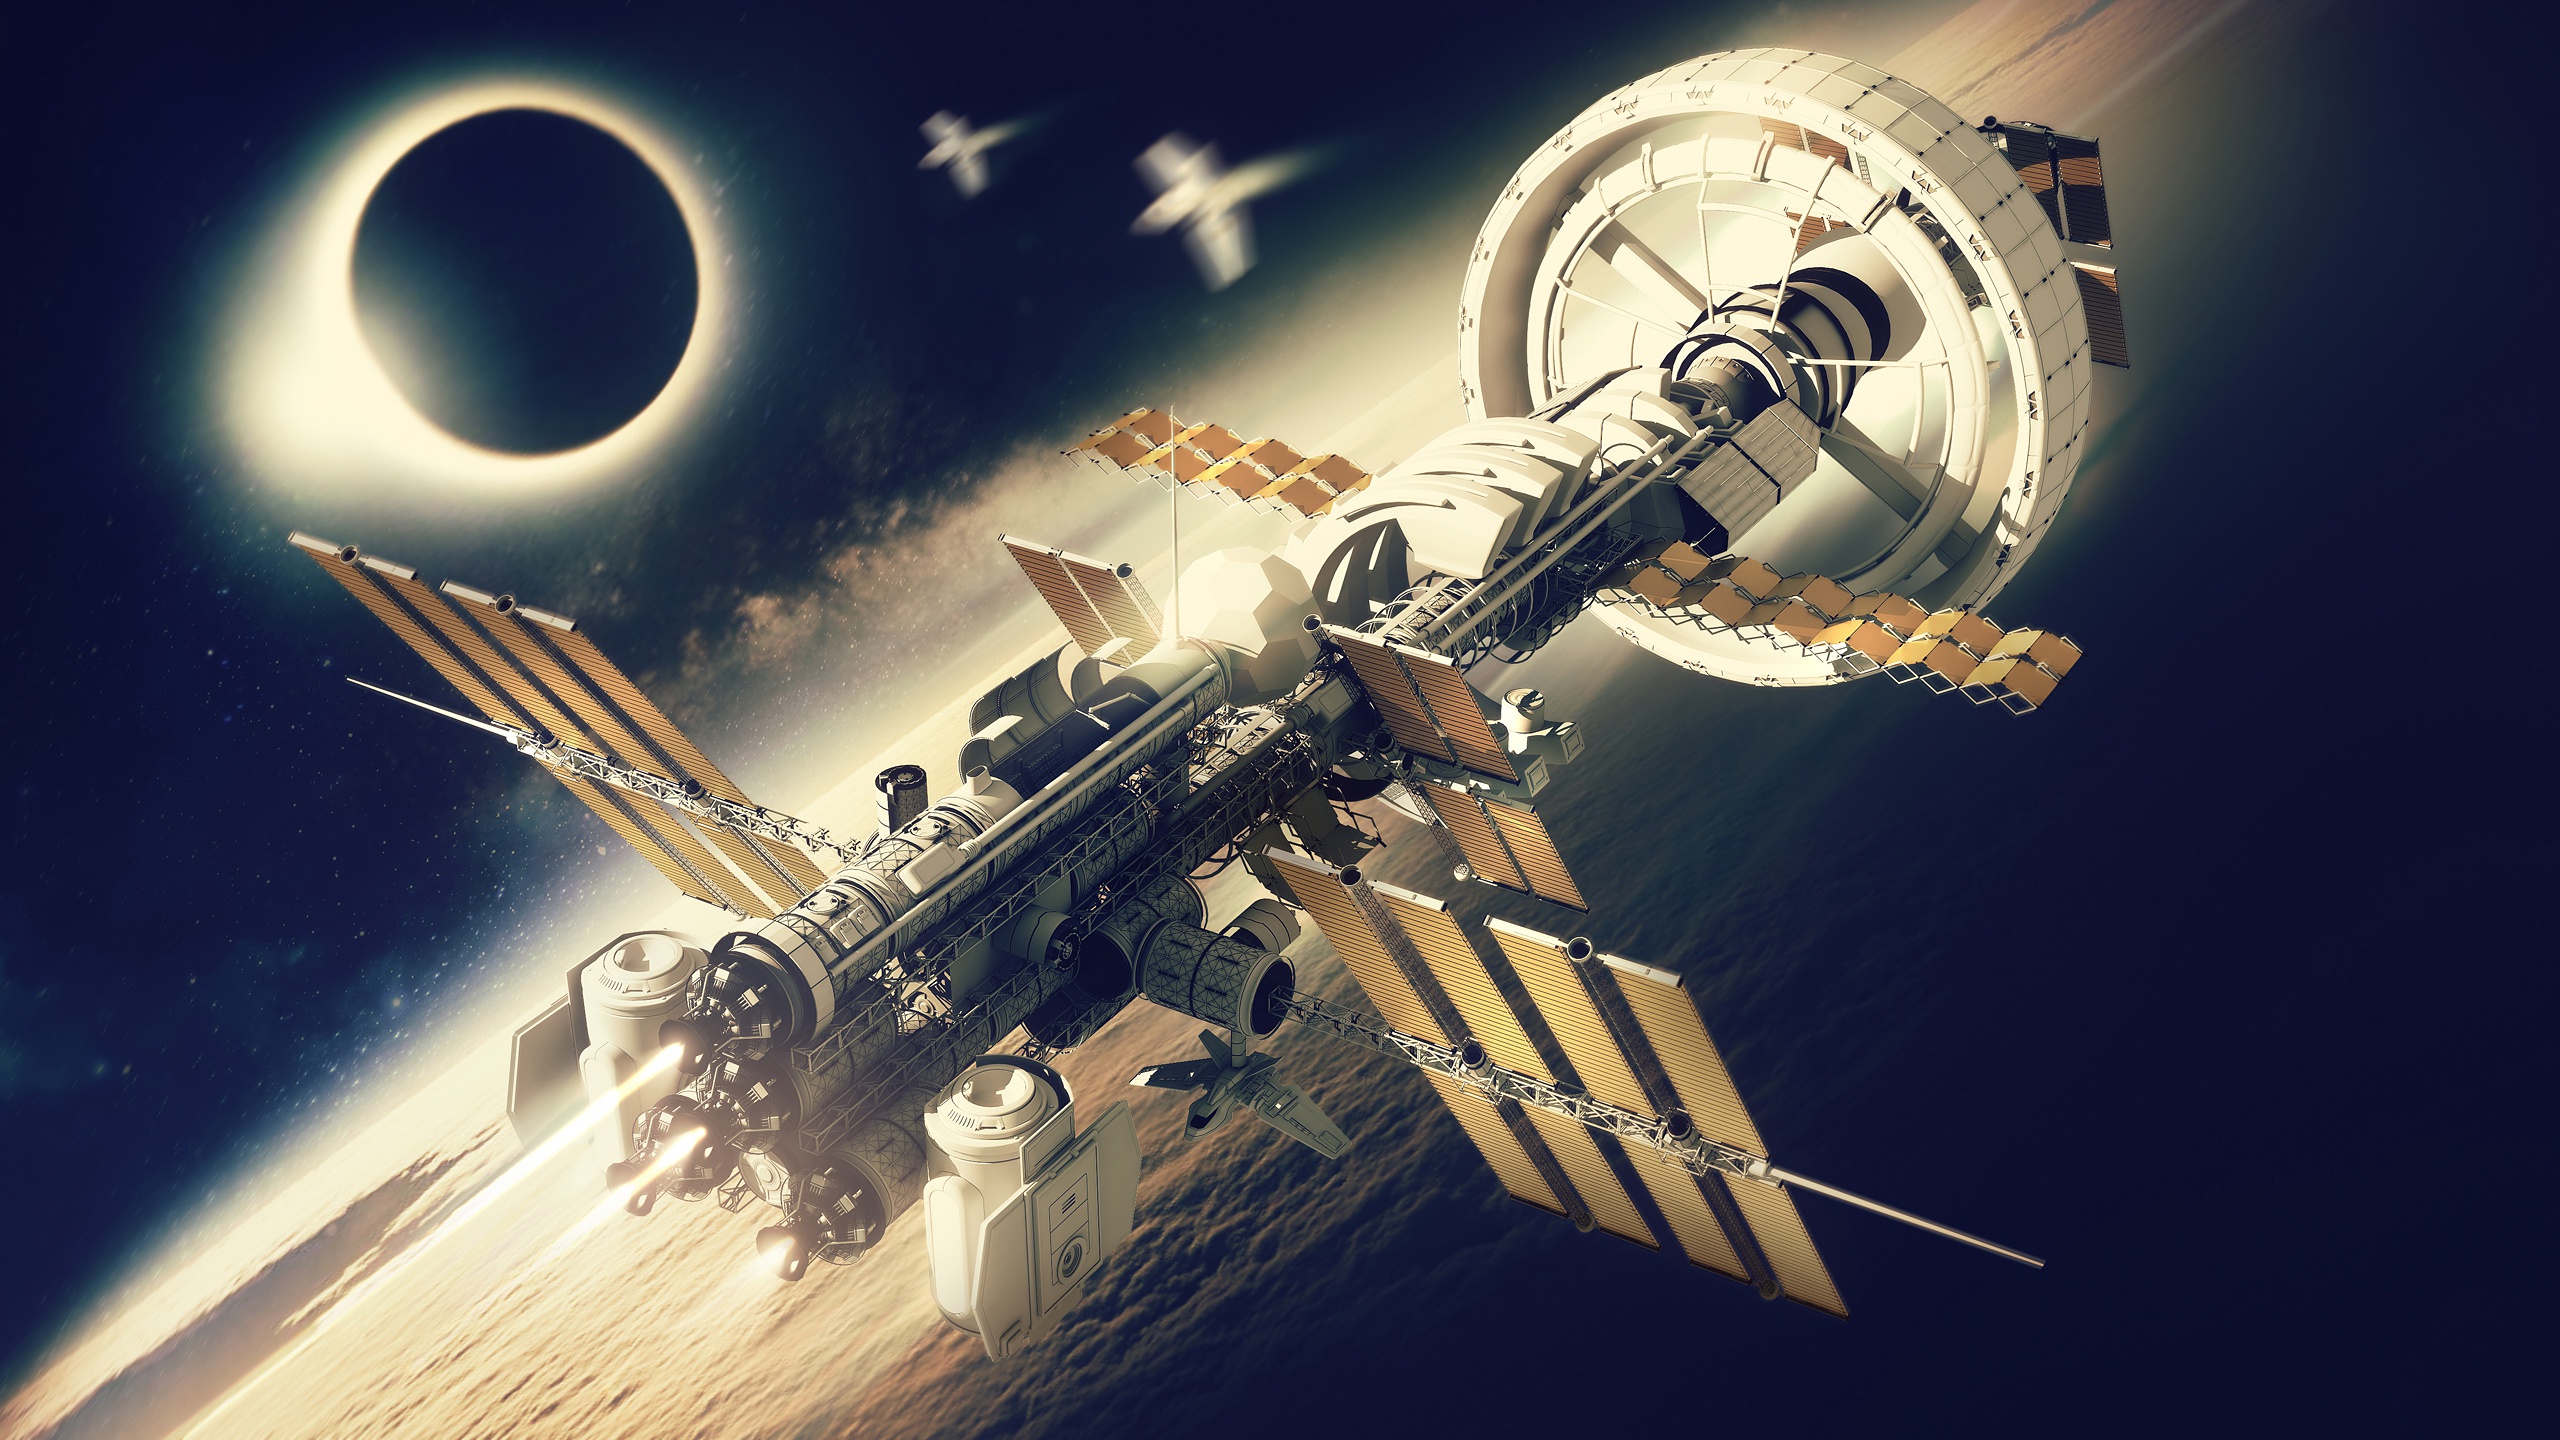 Space Space Art Science Fiction Spacestation Digital Art SpaceX Spaceship 2560x1440